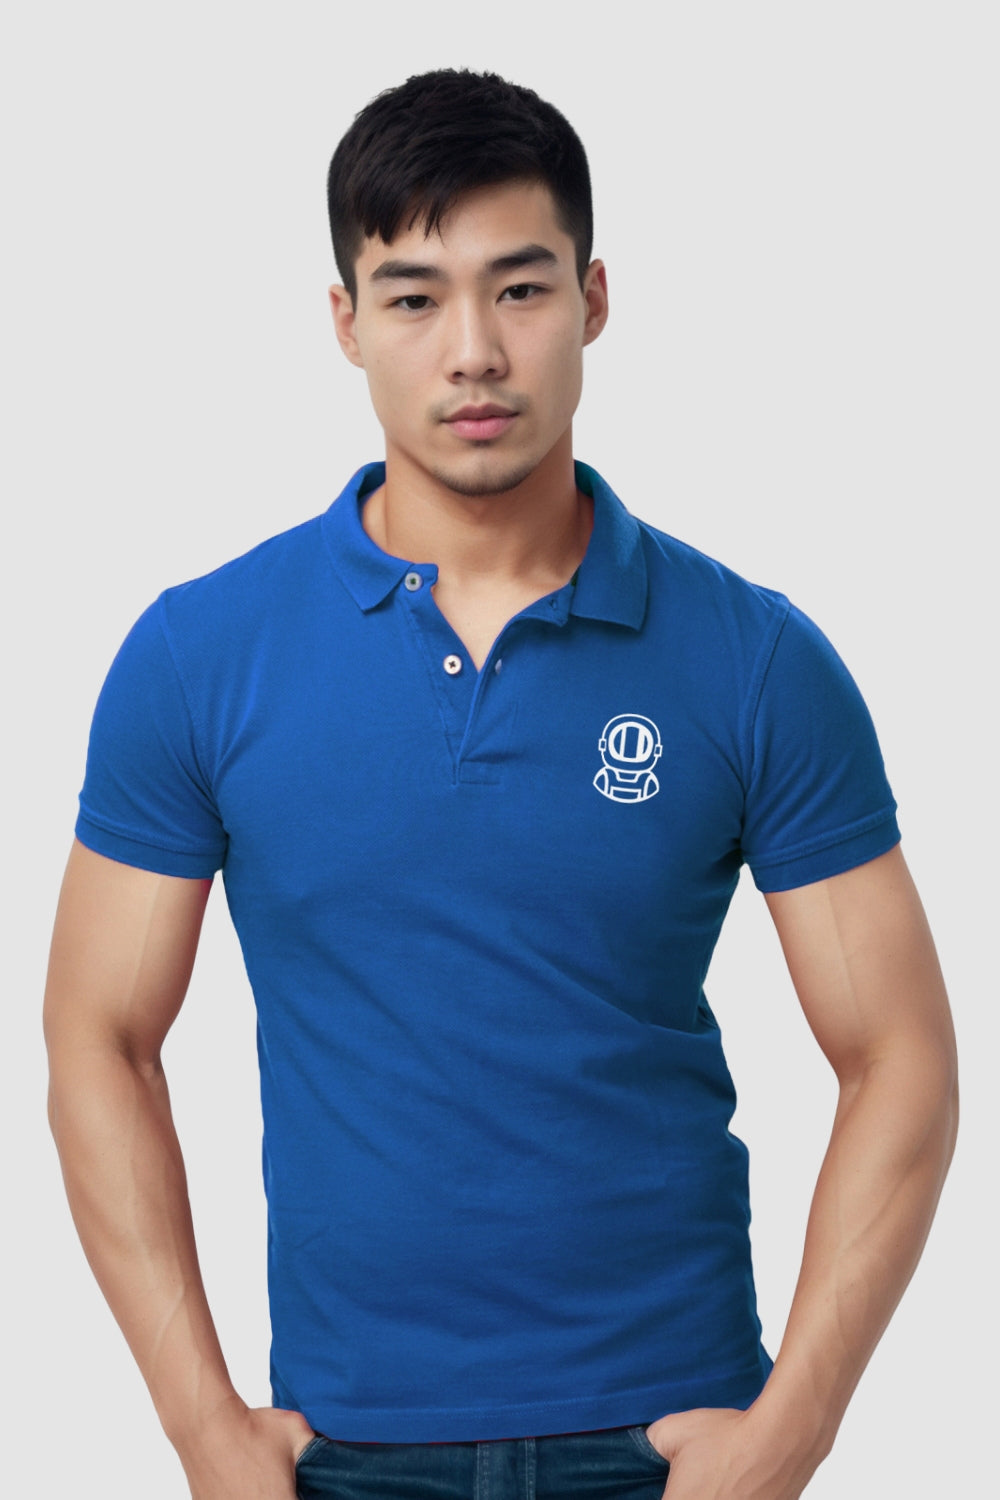 Space Suit Pocket Printed Blue Polo Tshirt